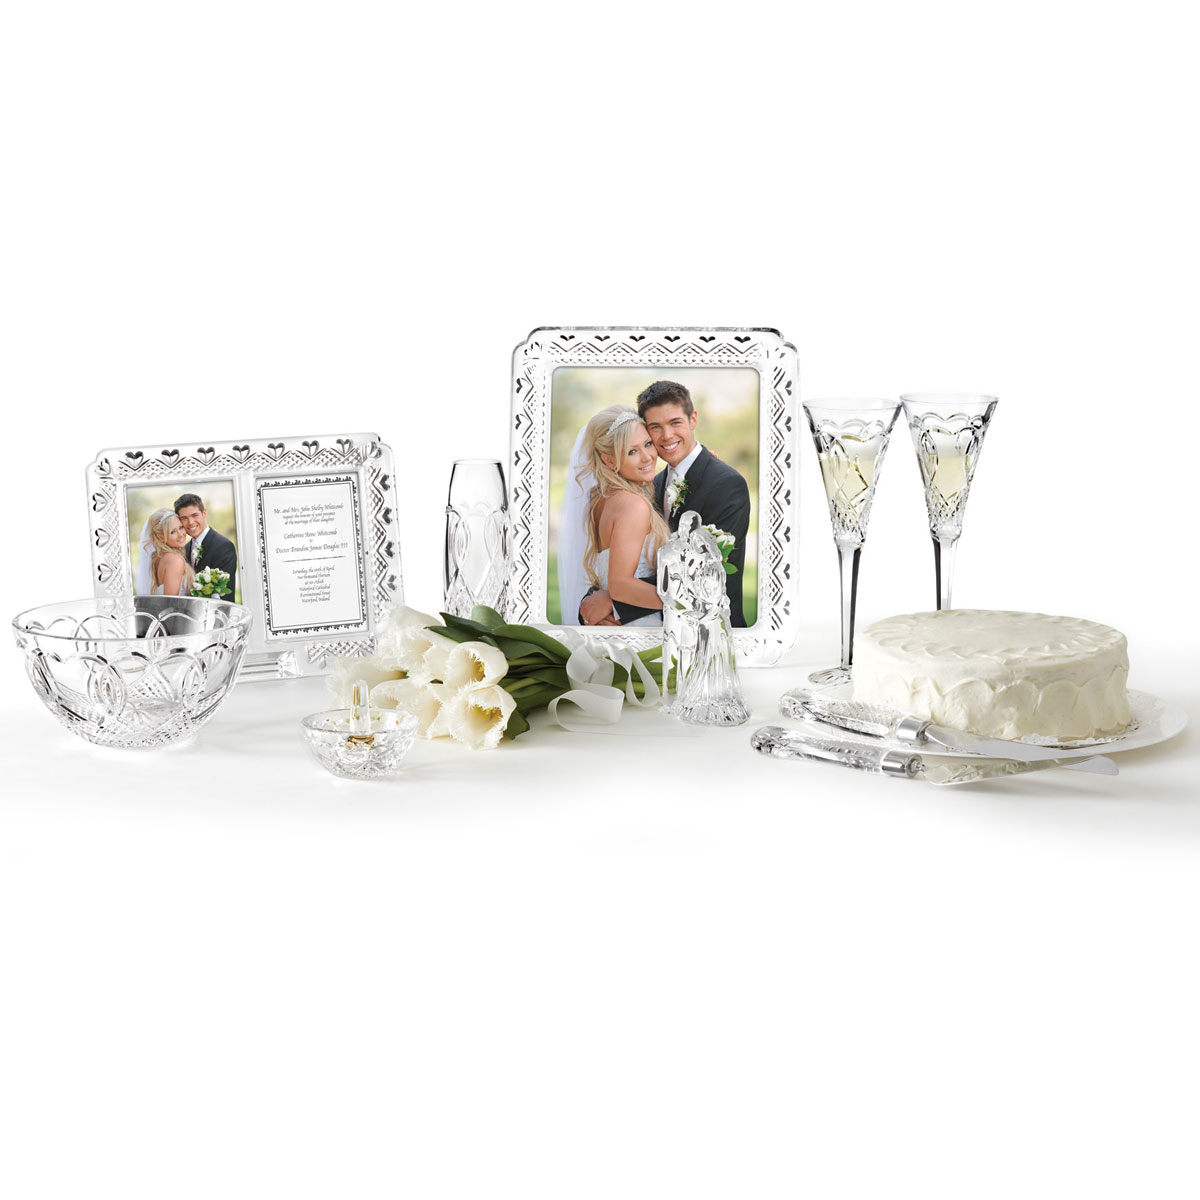 Waterford Crystal Wedding Heirloom 8x10